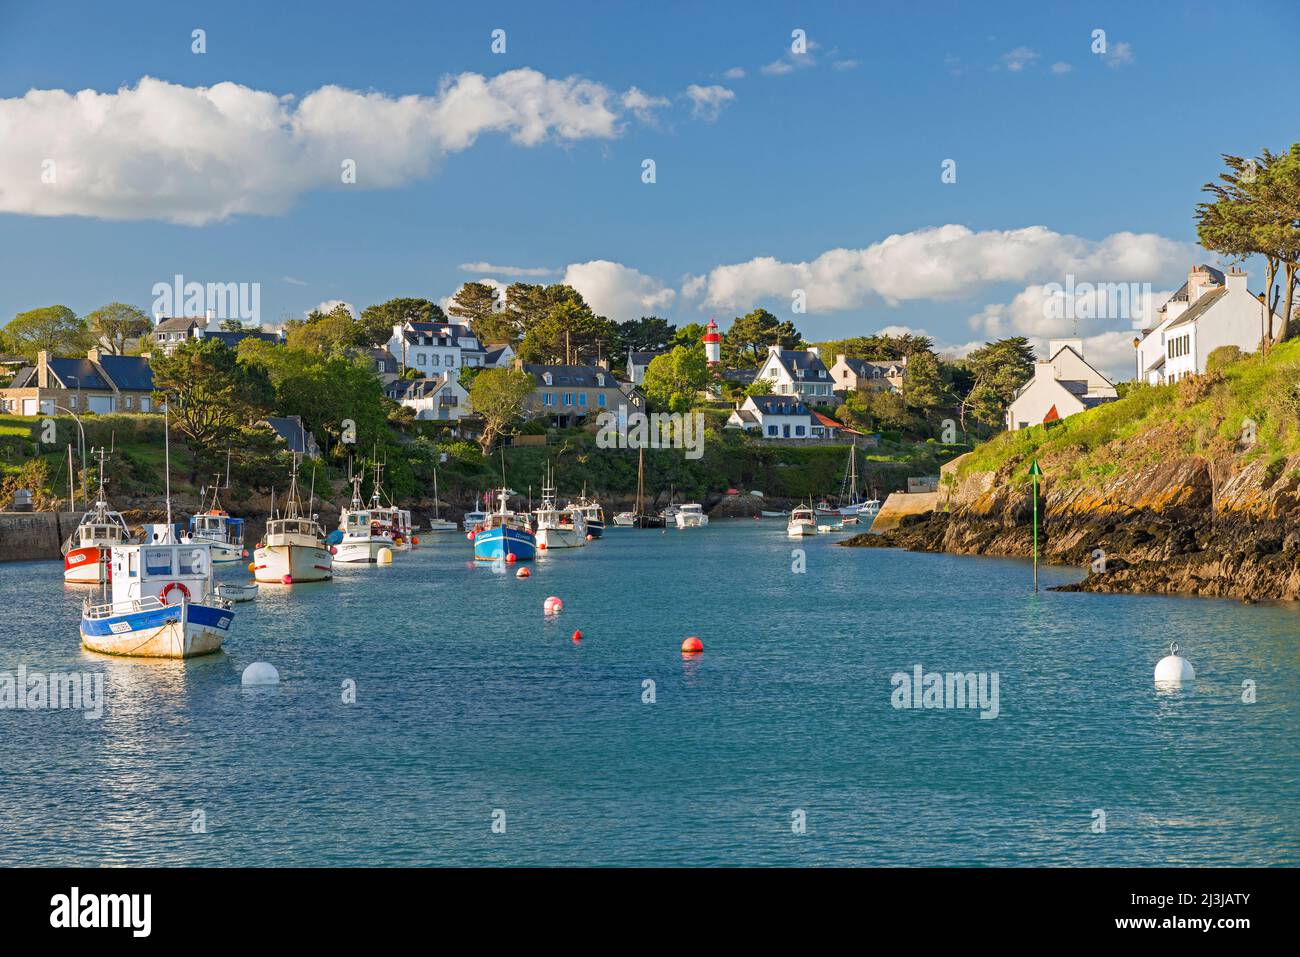 Doëlan, piccola città portuale nei pressi di Clohars-Carnoët nel Finistère meridionale, Francia, Bretagna, dipartimento Finistère Foto Stock